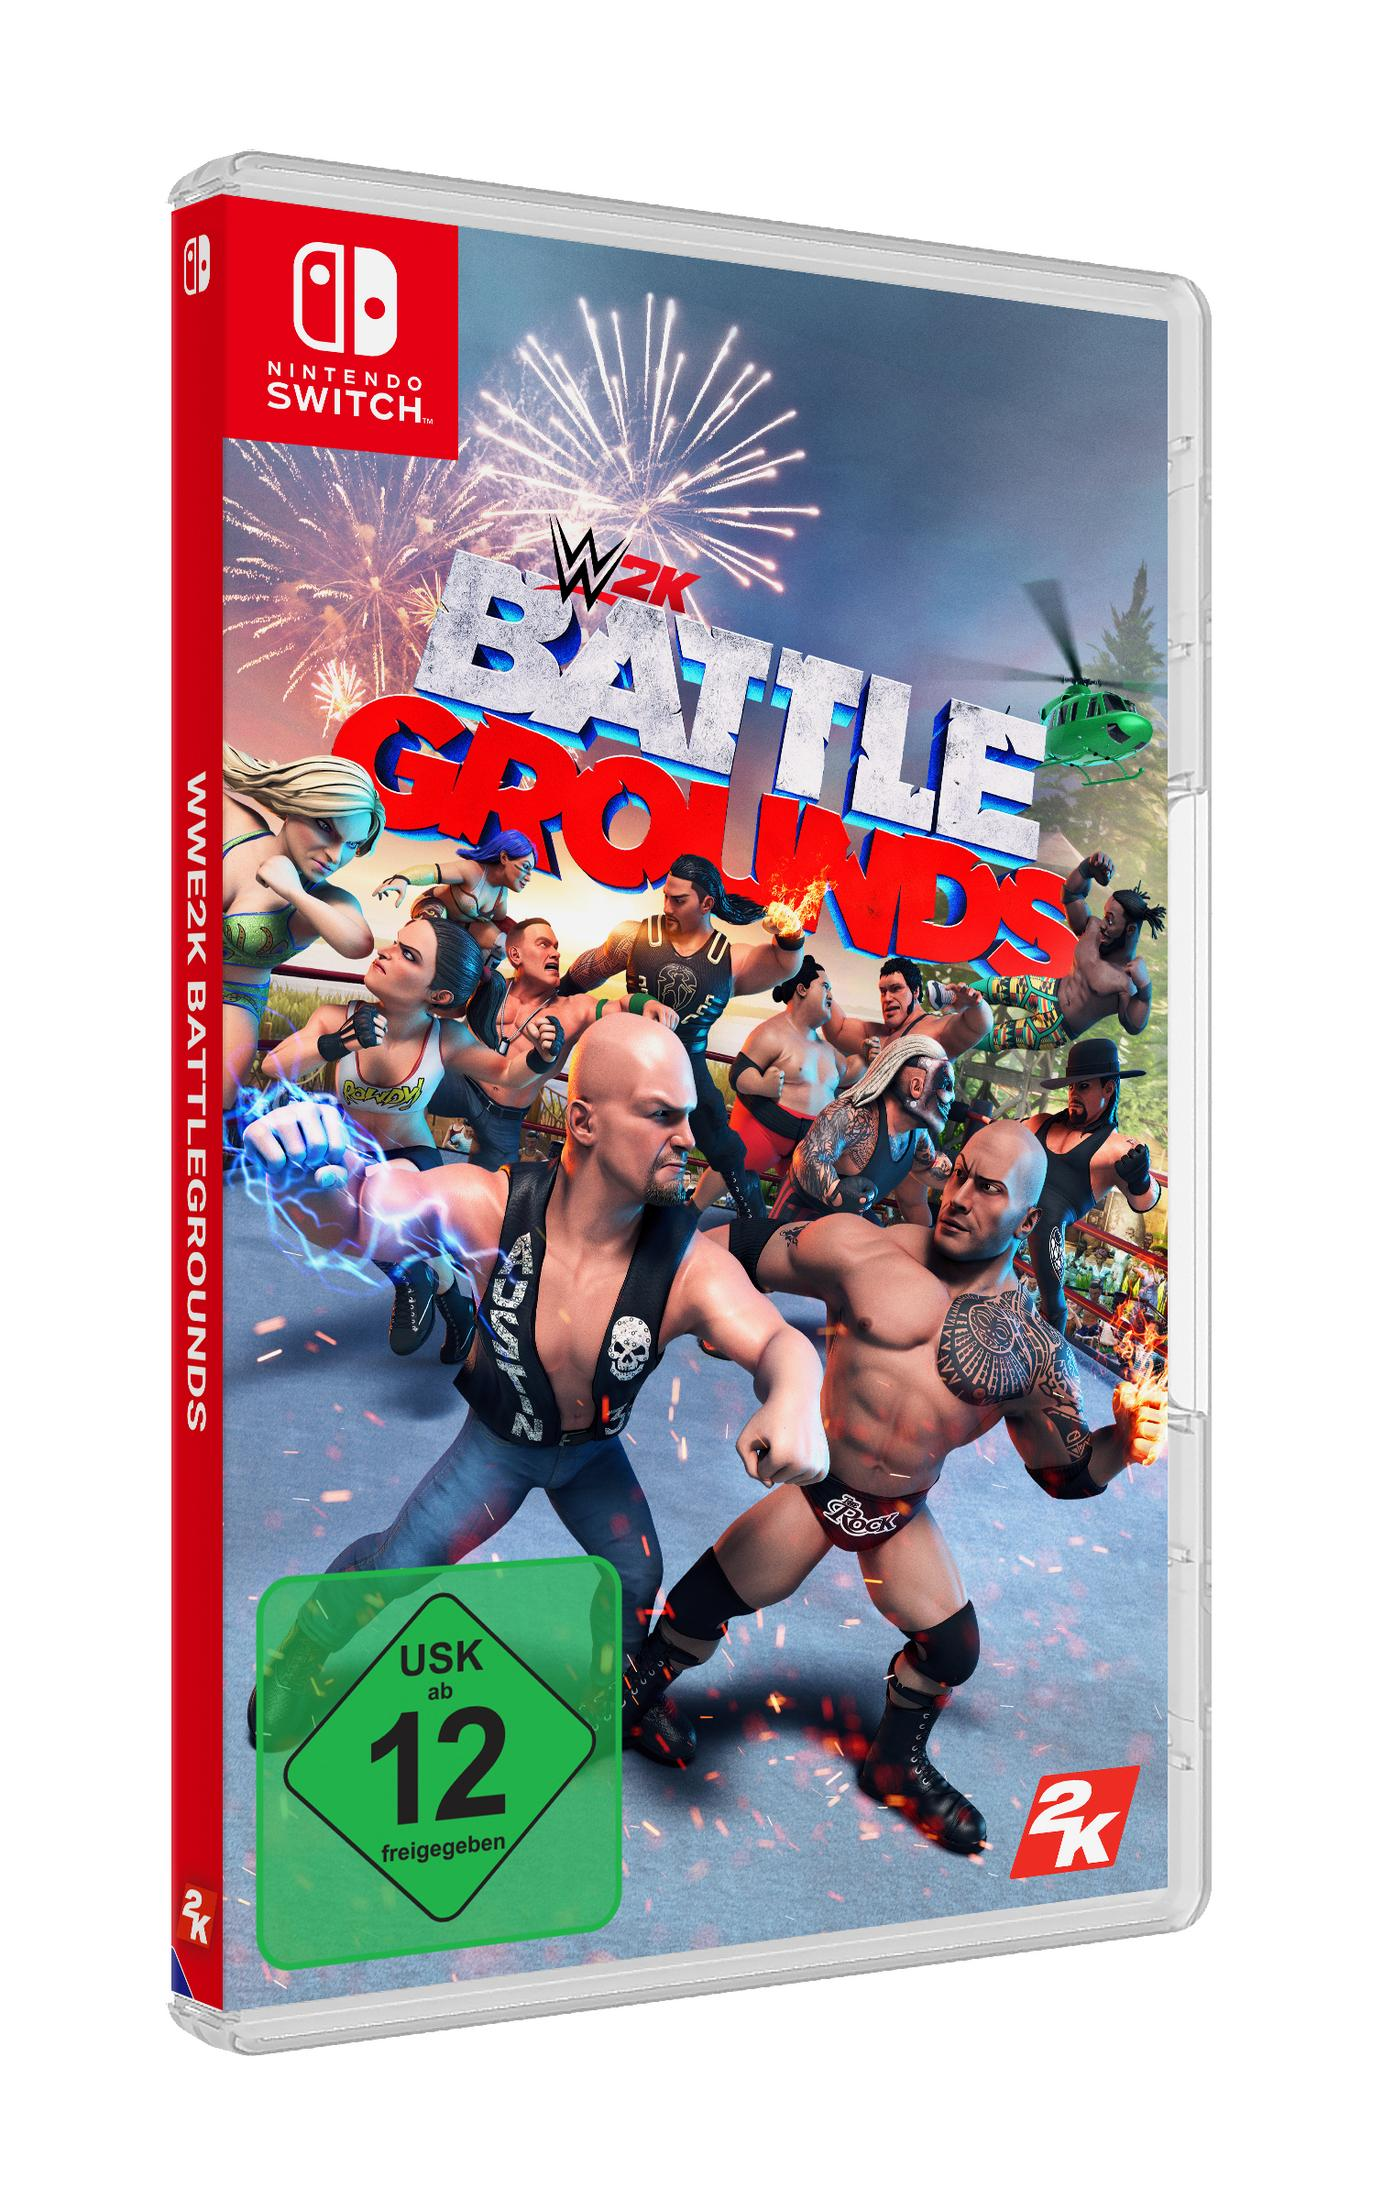 Battlegrounds SWITCH [Nintendo WWE - Switch] 2K